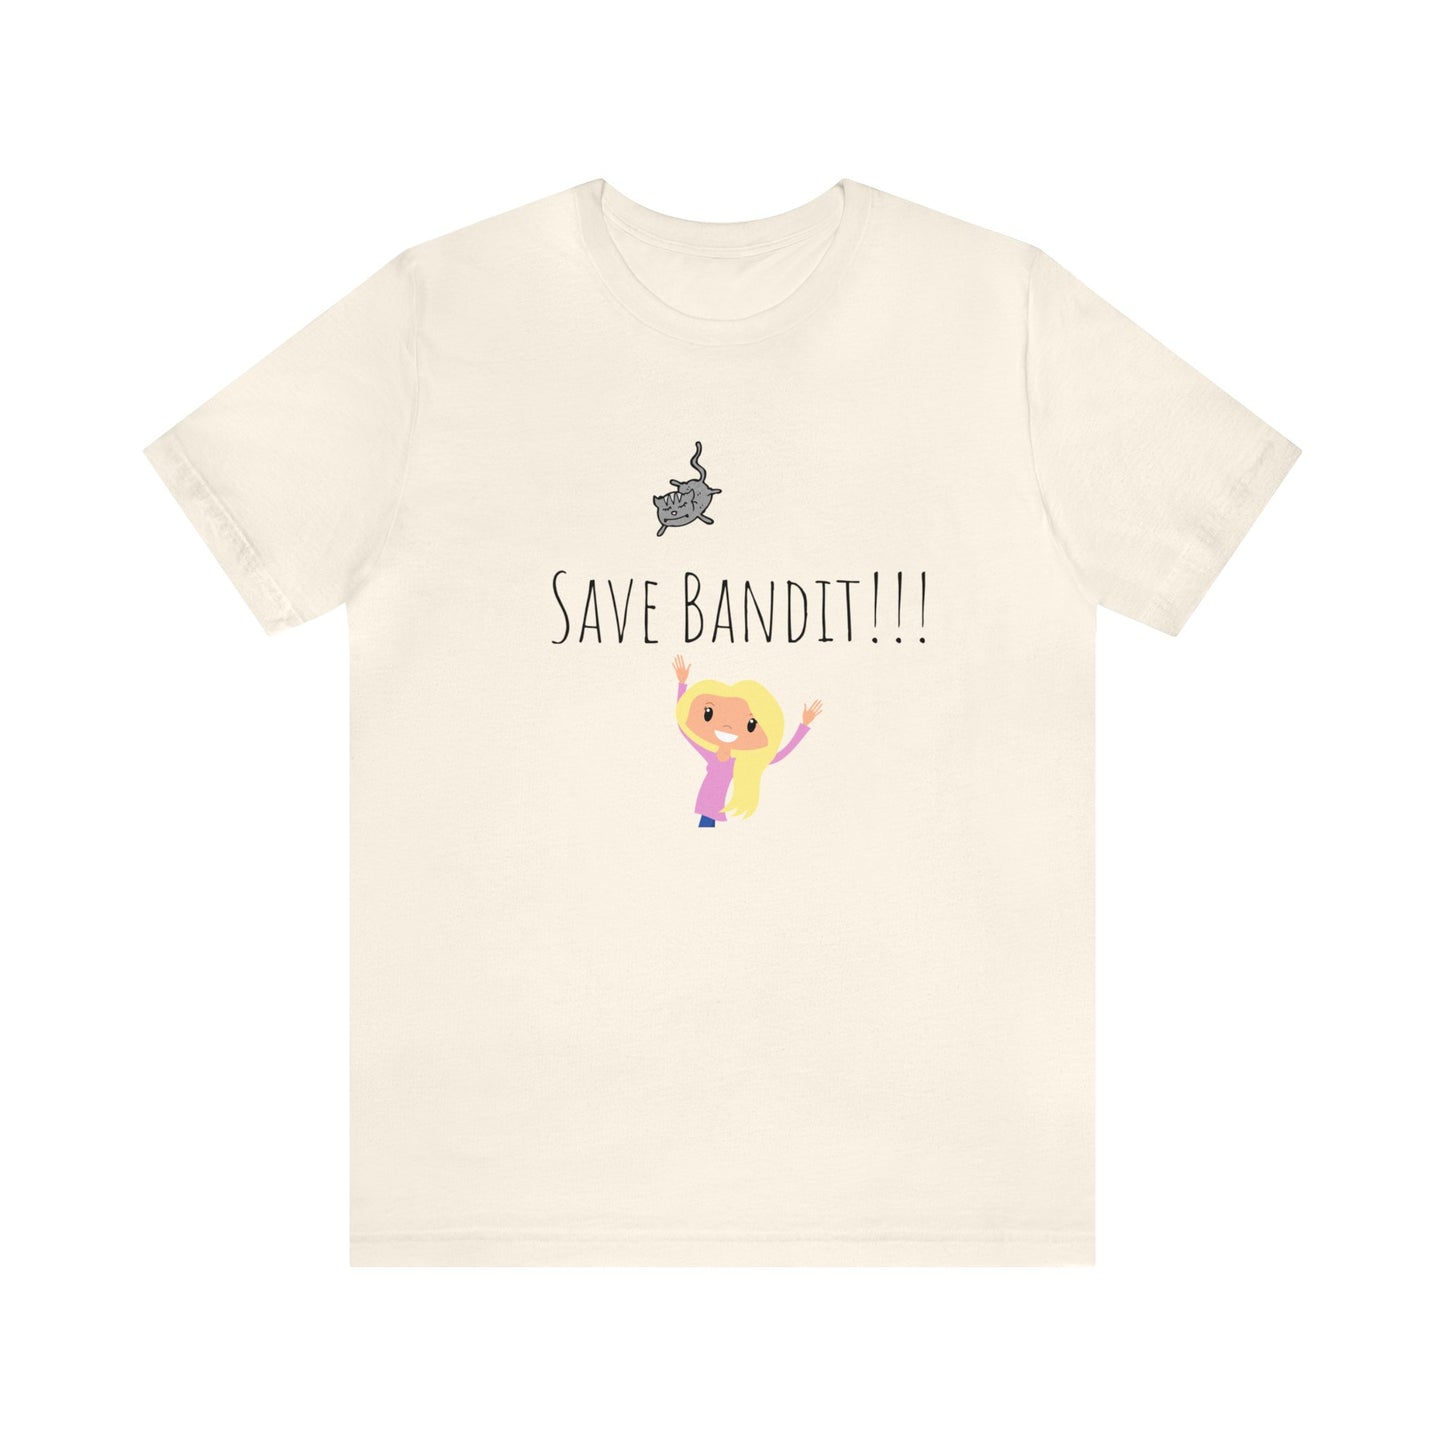 Save bandit t-shirt // the Office show merchandise